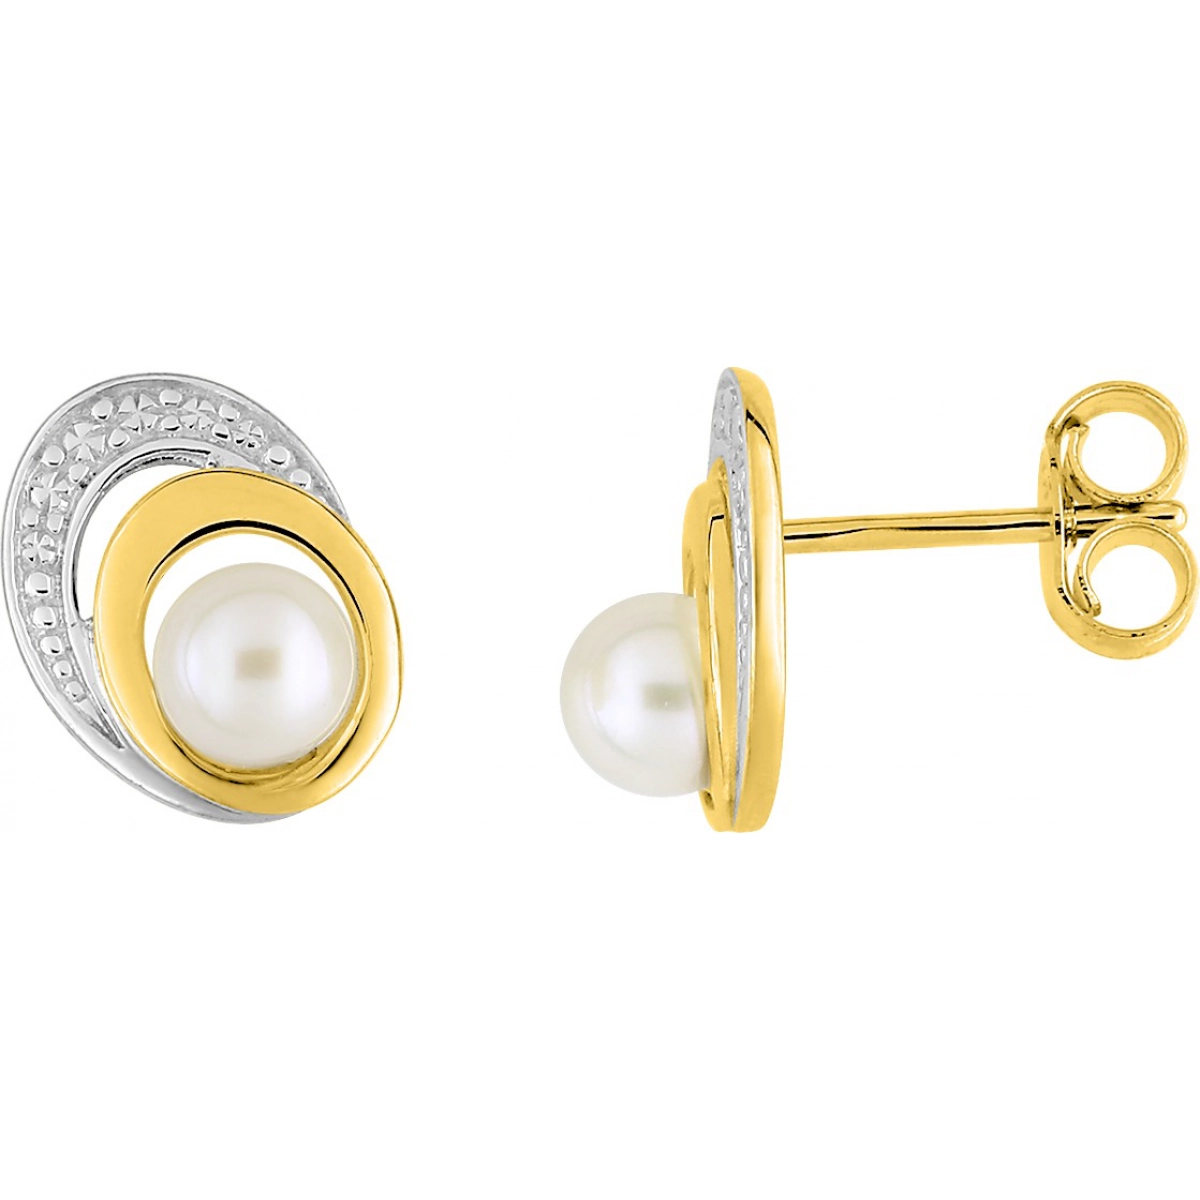 Earrings pair w. cultured FW pearl rhod 9K YG  Lua Blanca  297160.P3.0